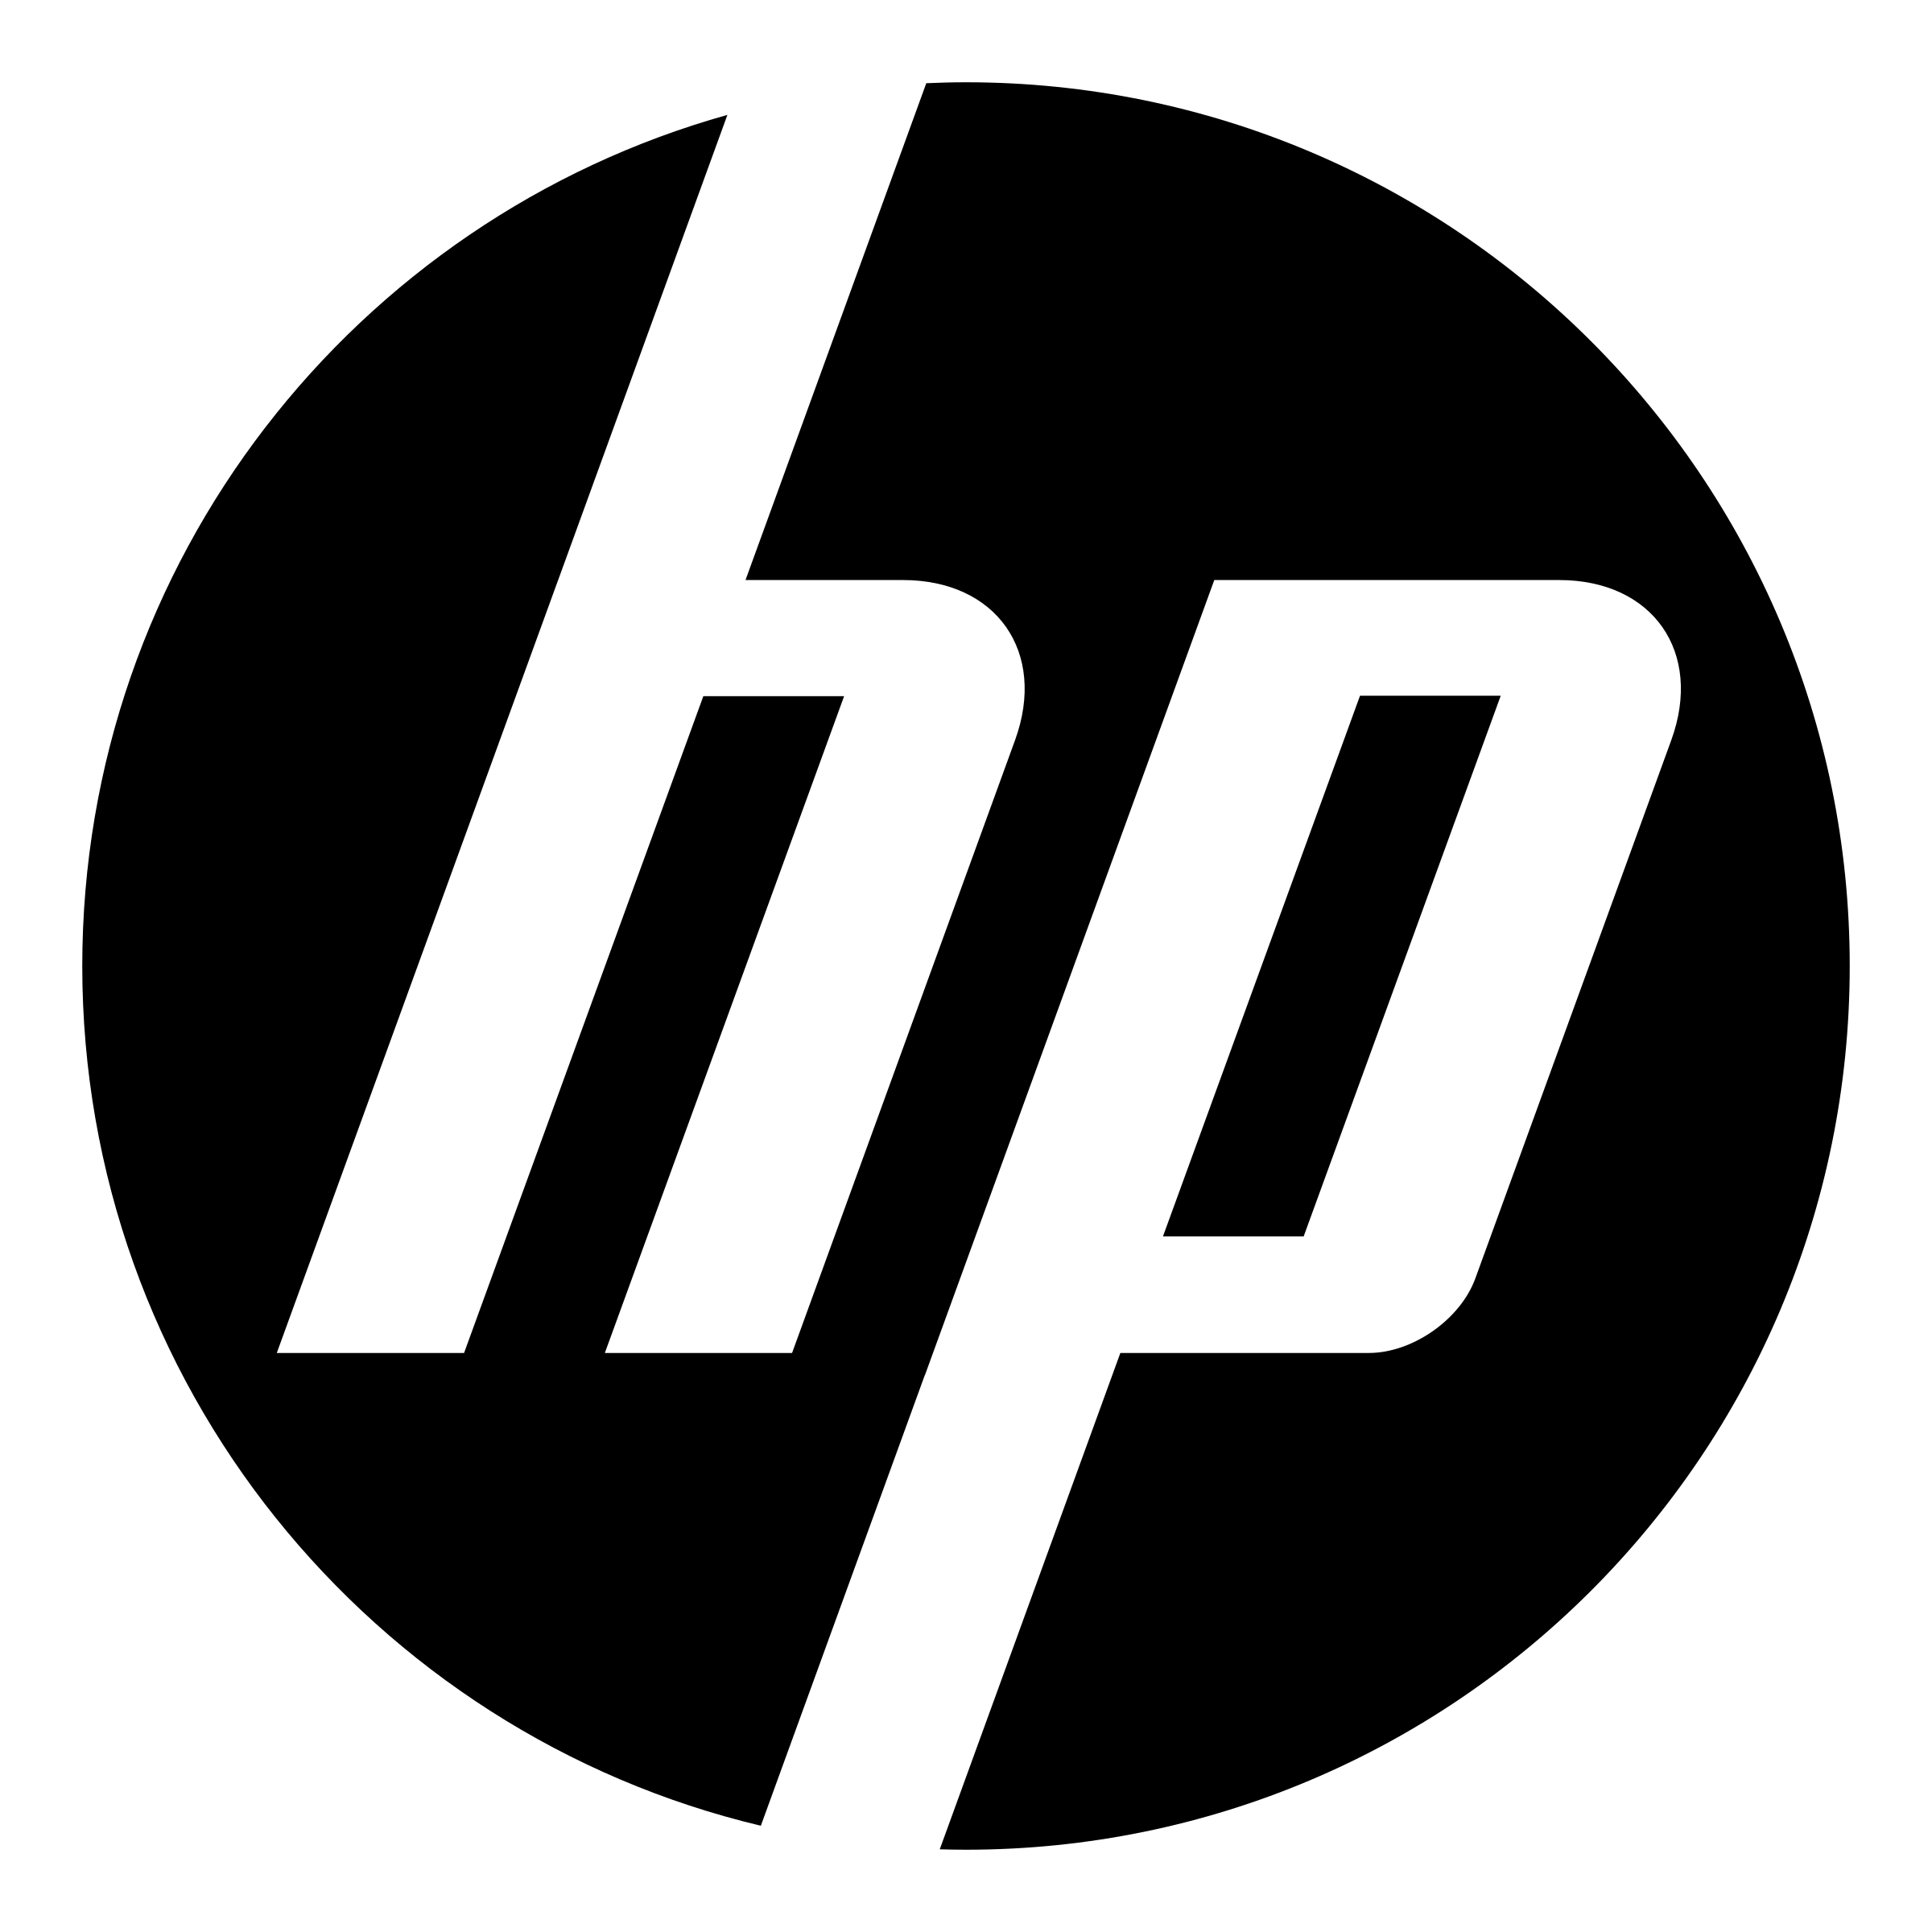 Download PNG image - HP Logo PNG Image 